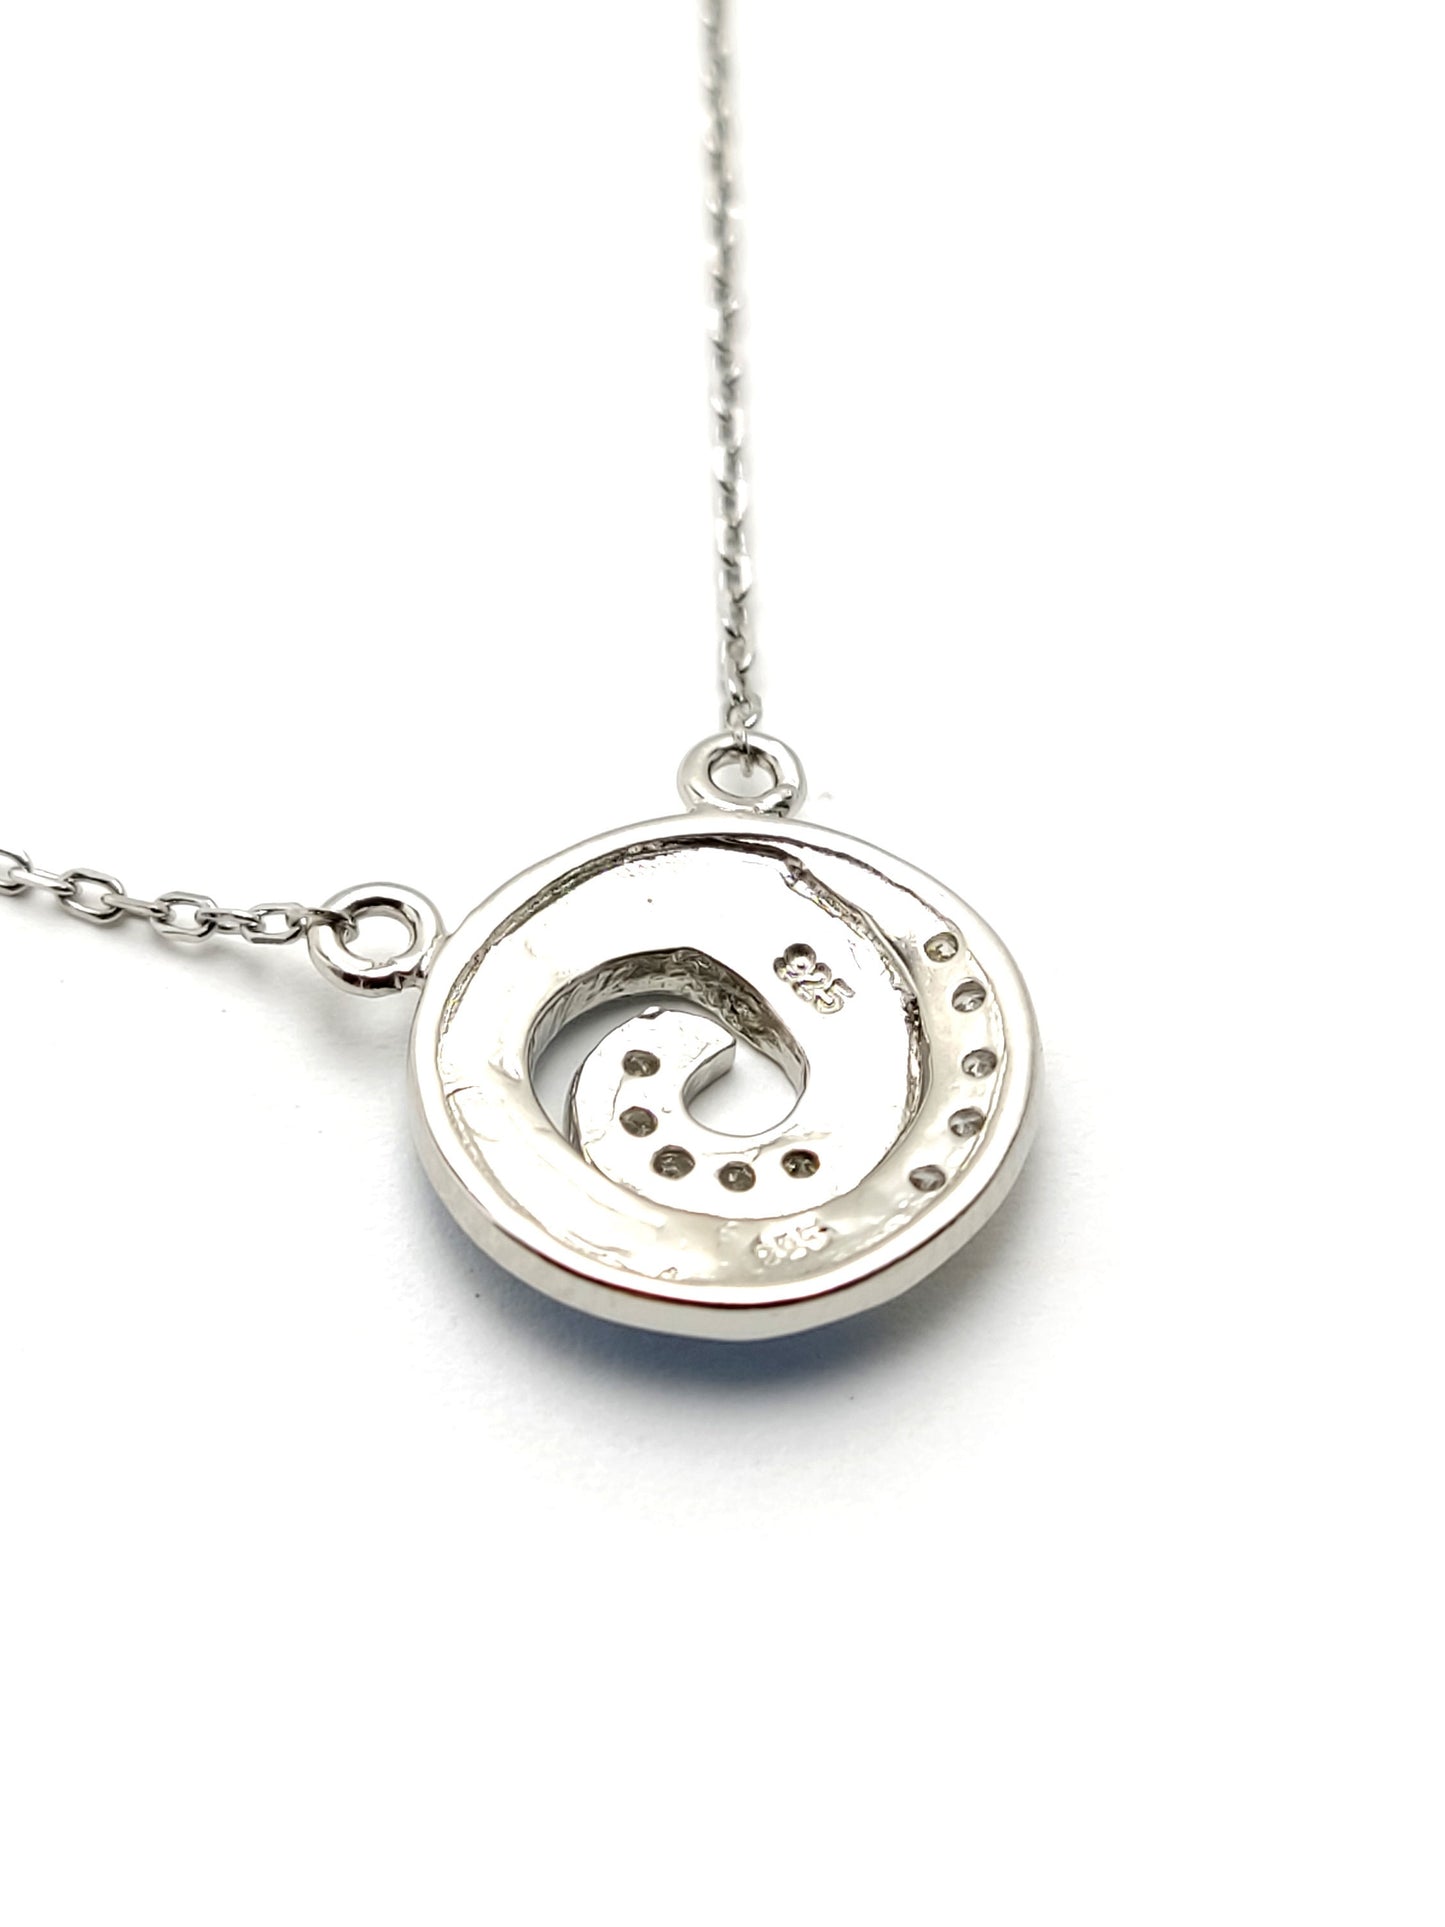 Greek Silver Necklace, Circle Of Life Infinity Spiral Design Ocean Blue Opal Chain Pendant, Jewelry From Greece, Griechischer Silber Schmuck